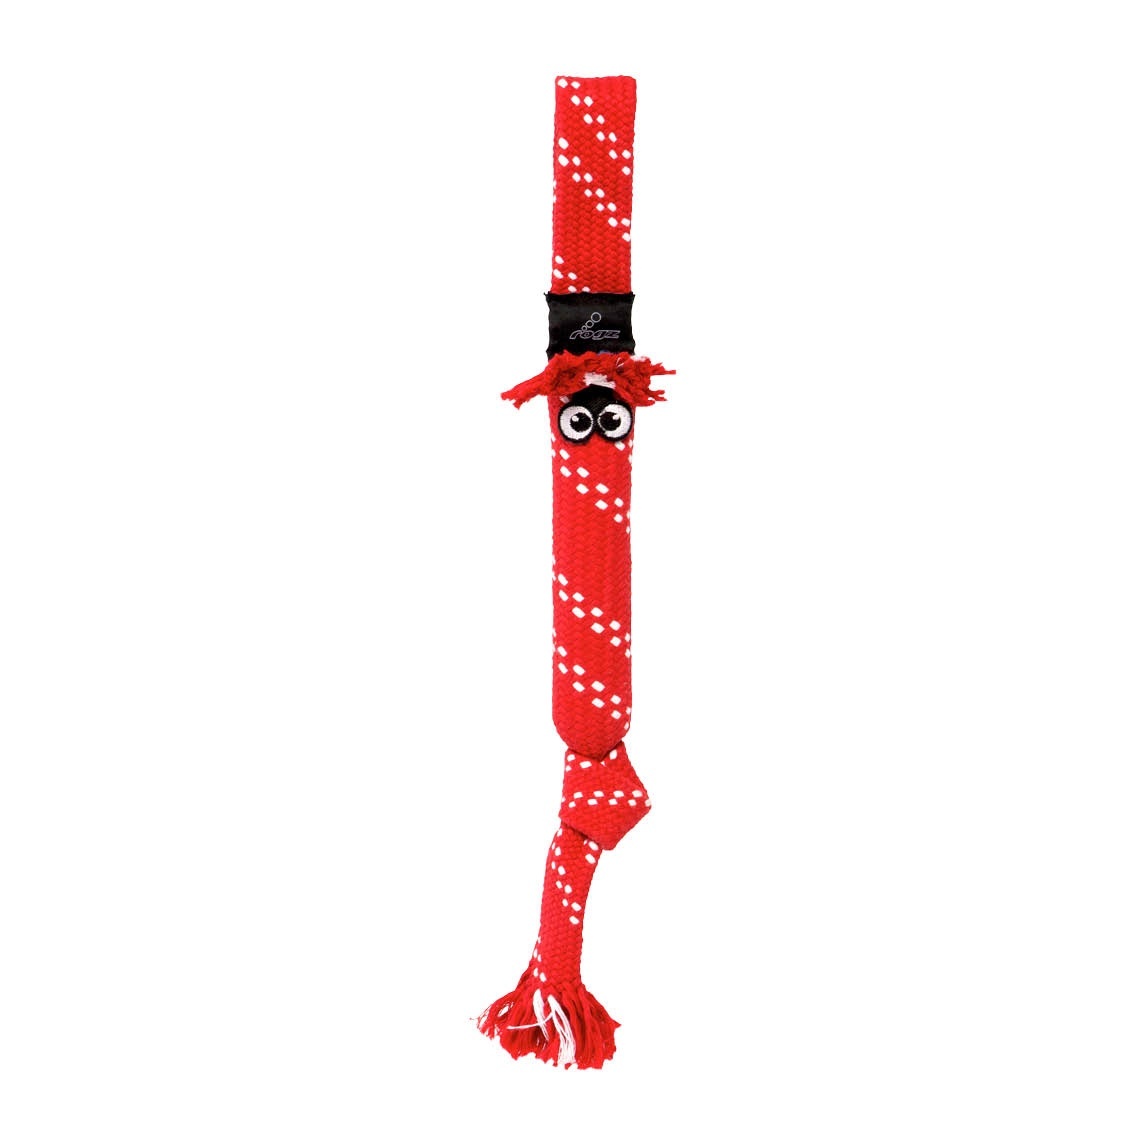 Rogz Rogz игрушка веревочная шуршащая SCRUBZ, красный (M) rogz игрушка для собак rogz scrubz m веревочная шуршащая сосиска лайм 440 мм